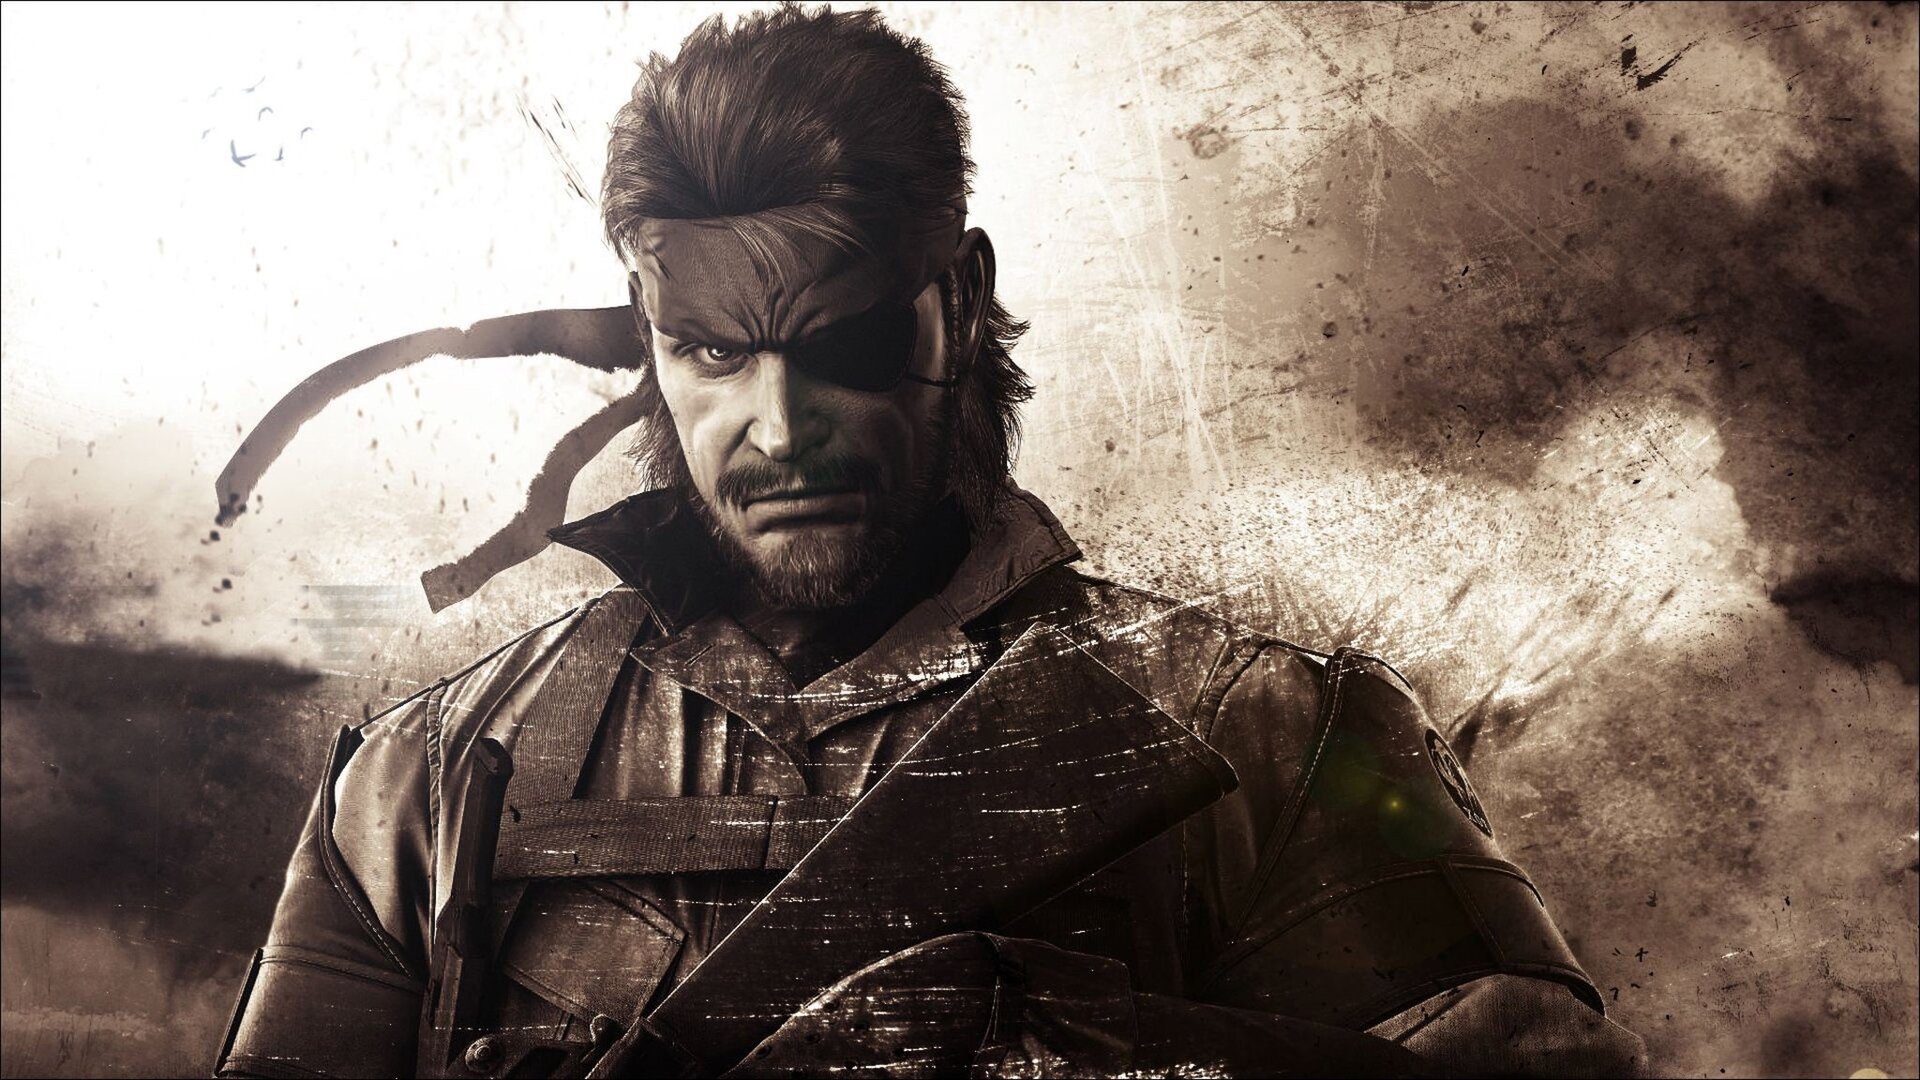 Metal Gear Solid Wallpapers